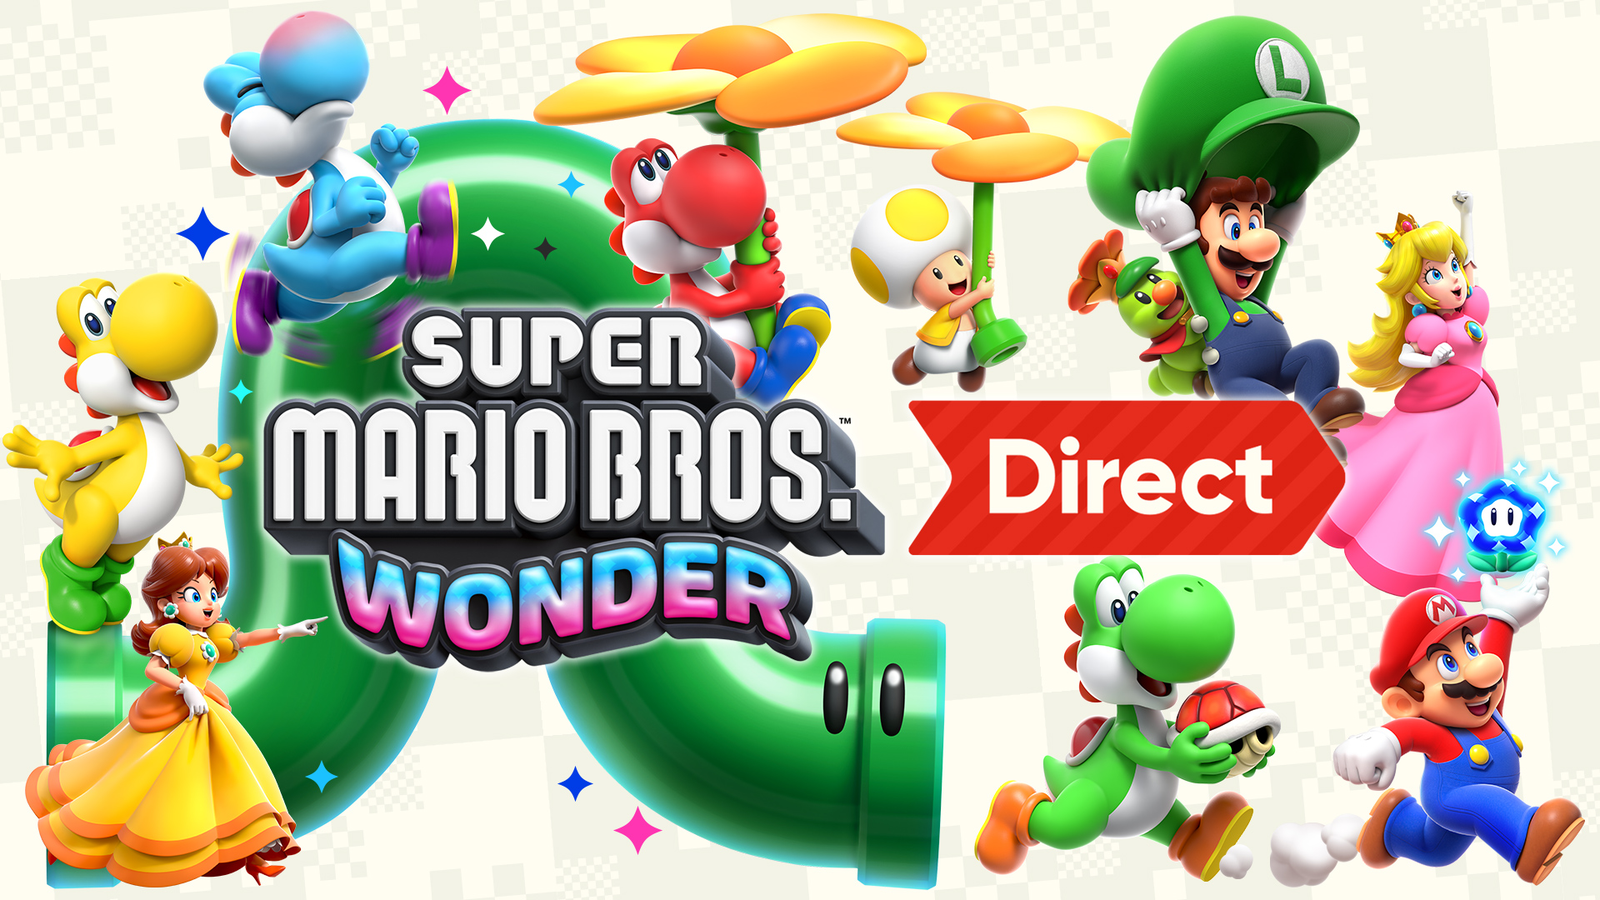 Super Mario Bros. Wonder for Nintendo Switch - Download